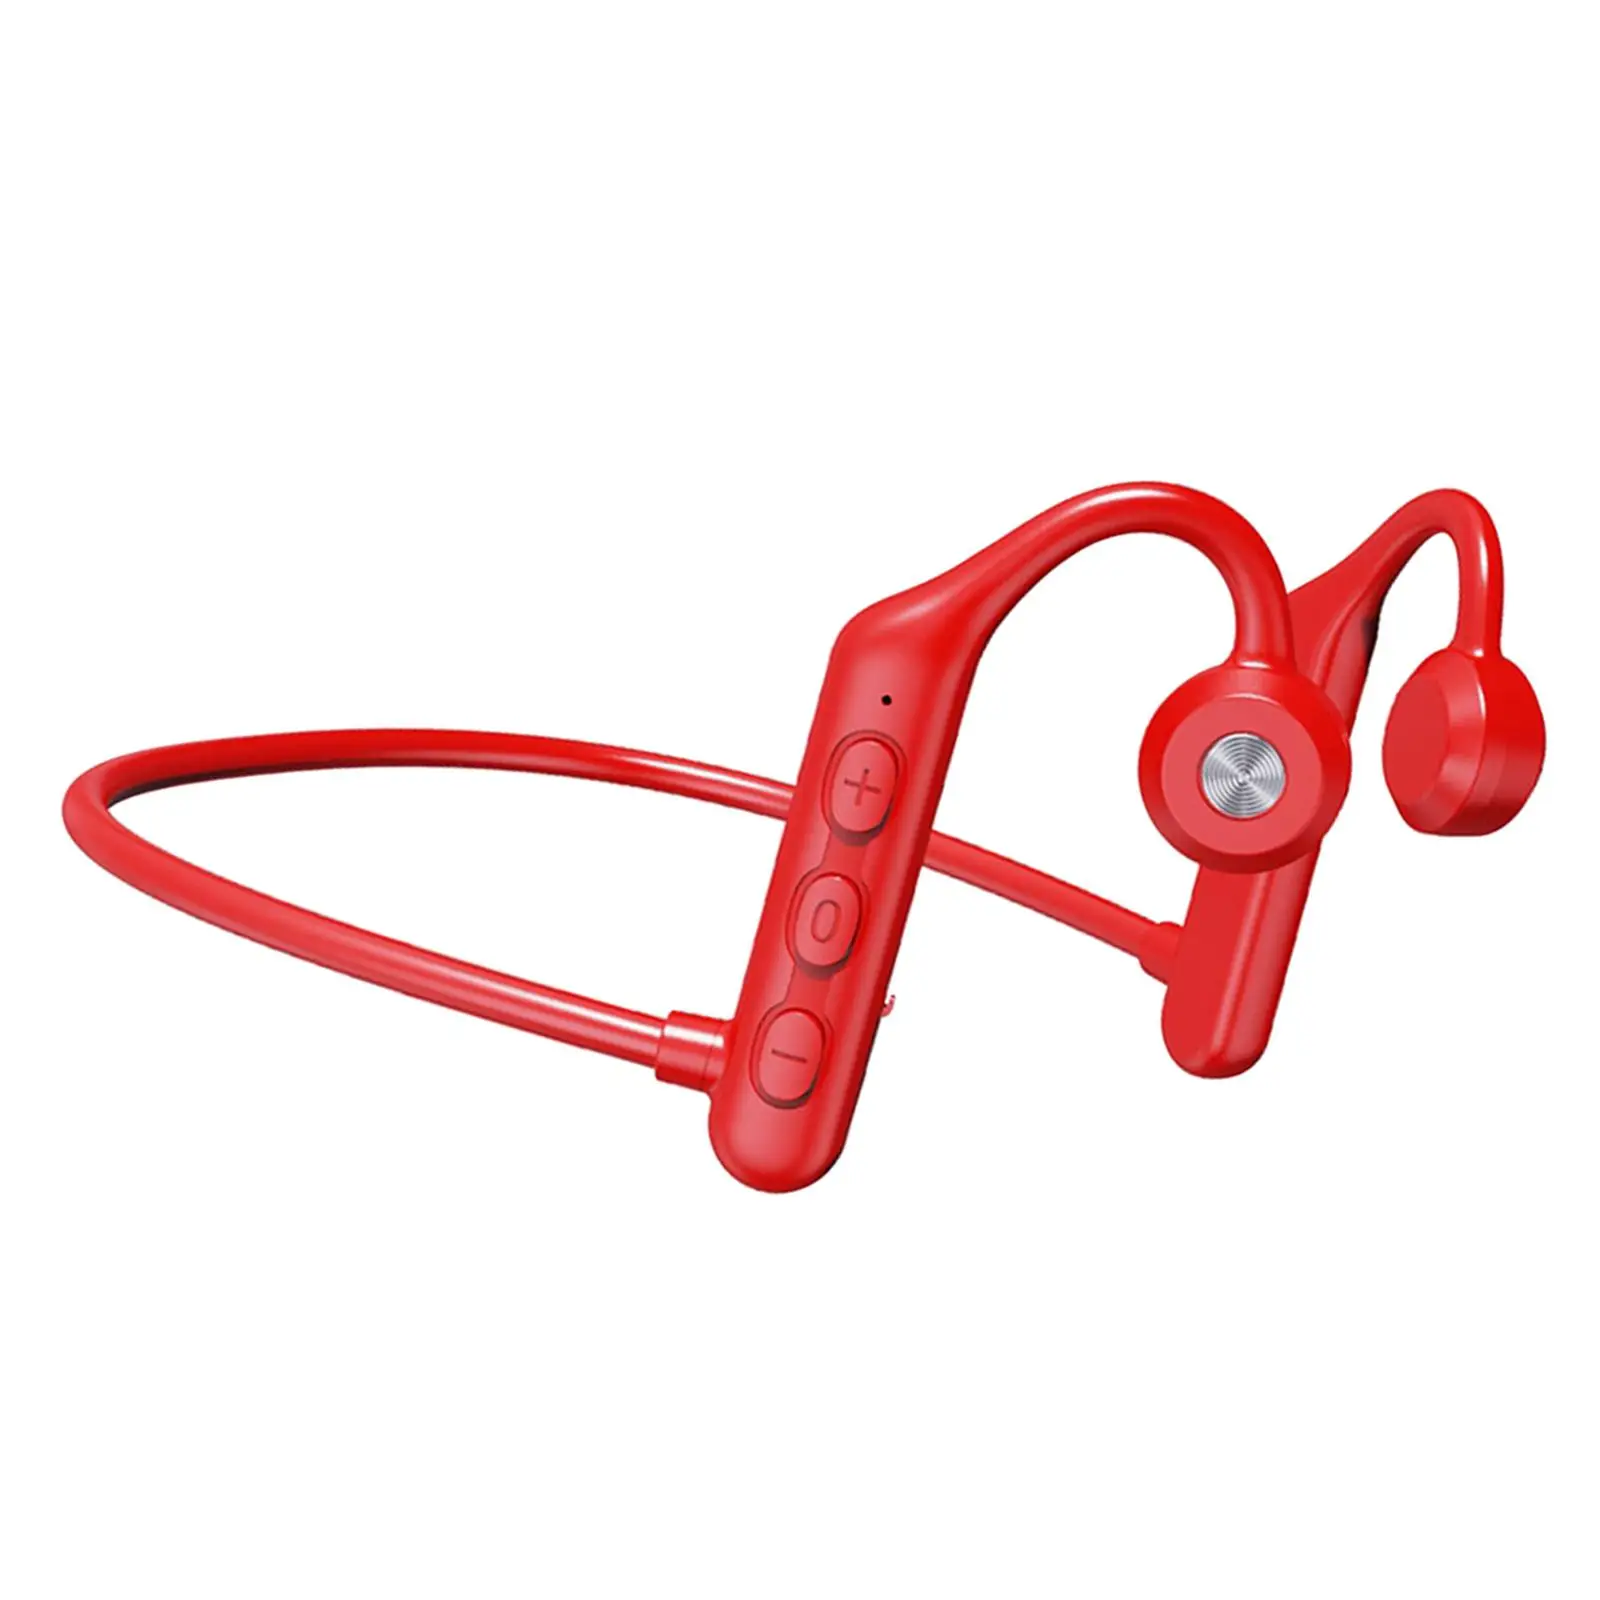 Sweatproof Air Conduction Headphones Open Ear Headphones for Workout Sports